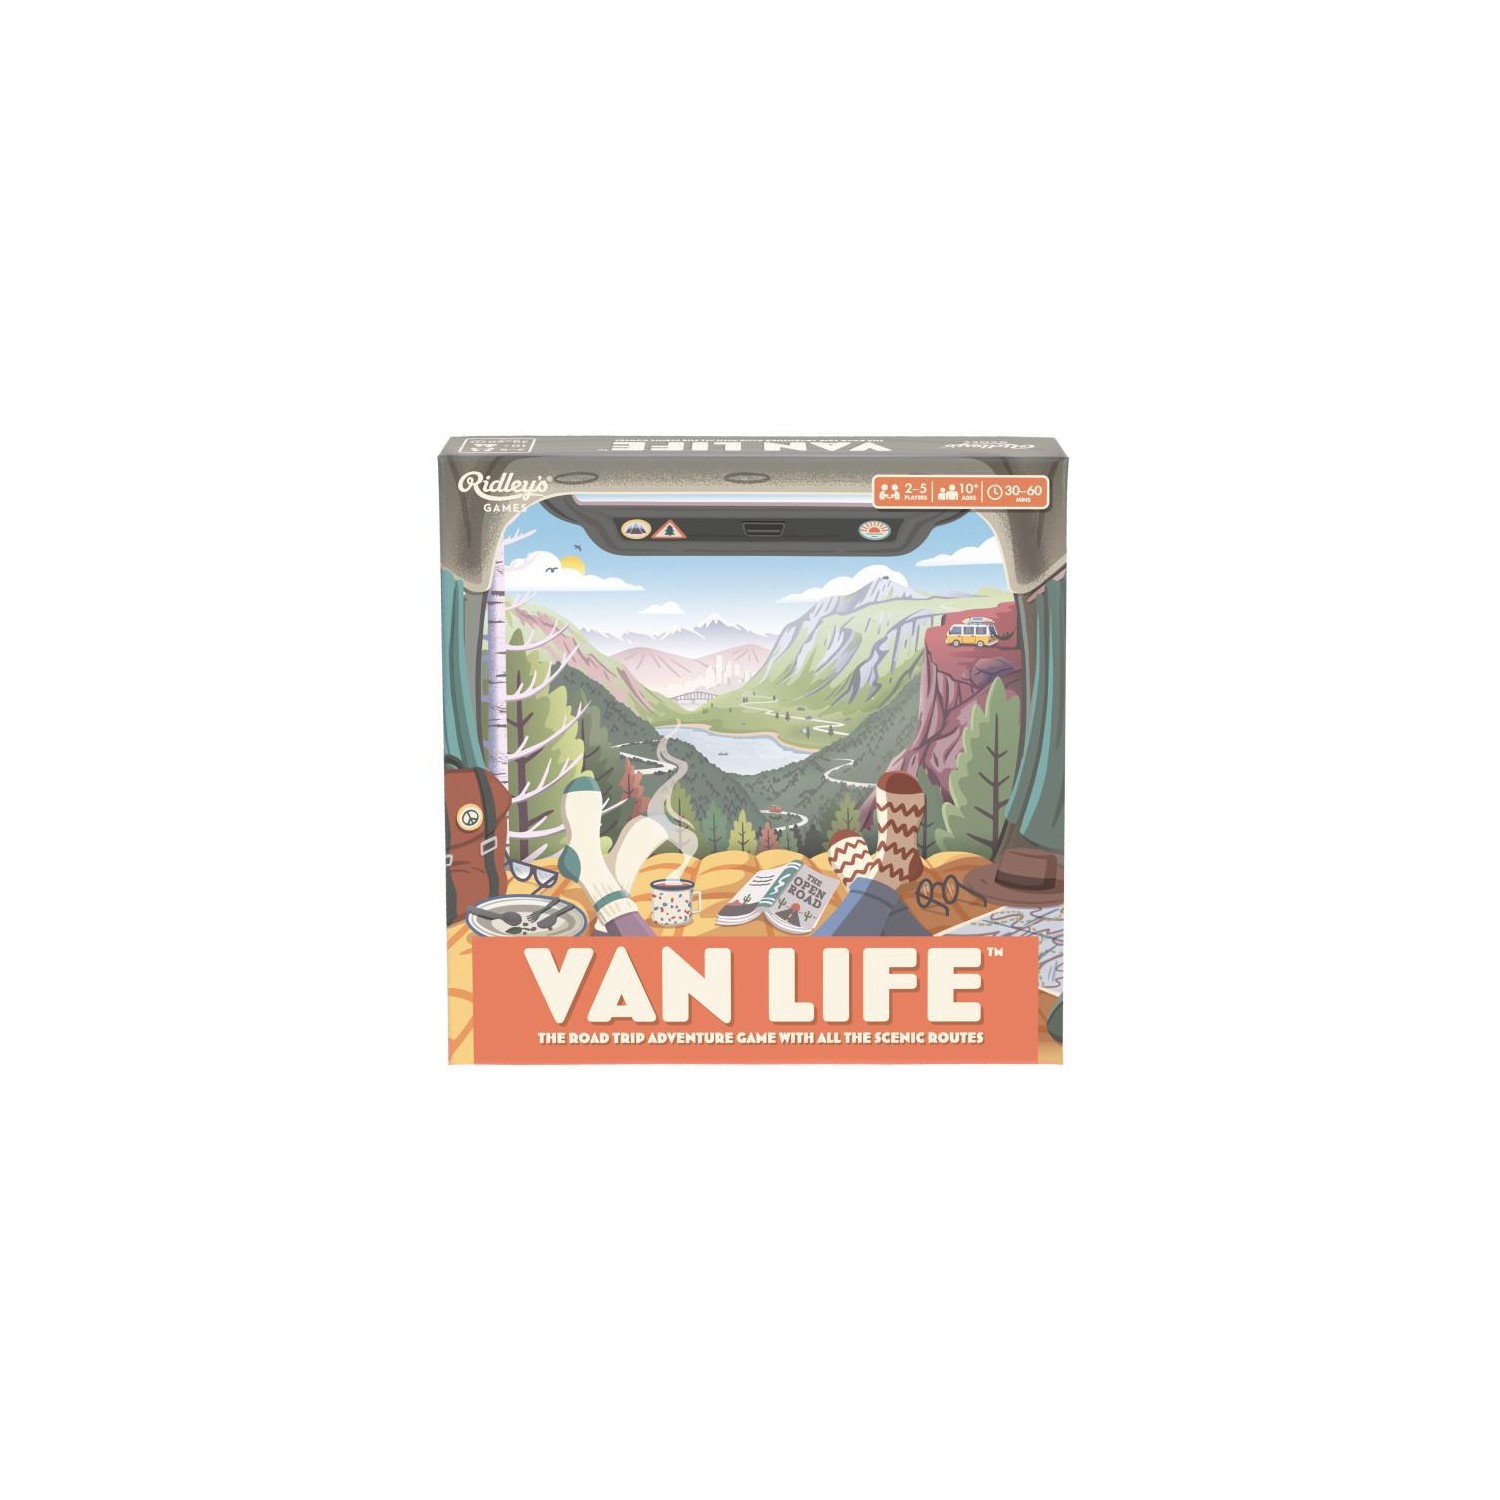 Juego Ridley's Van Life